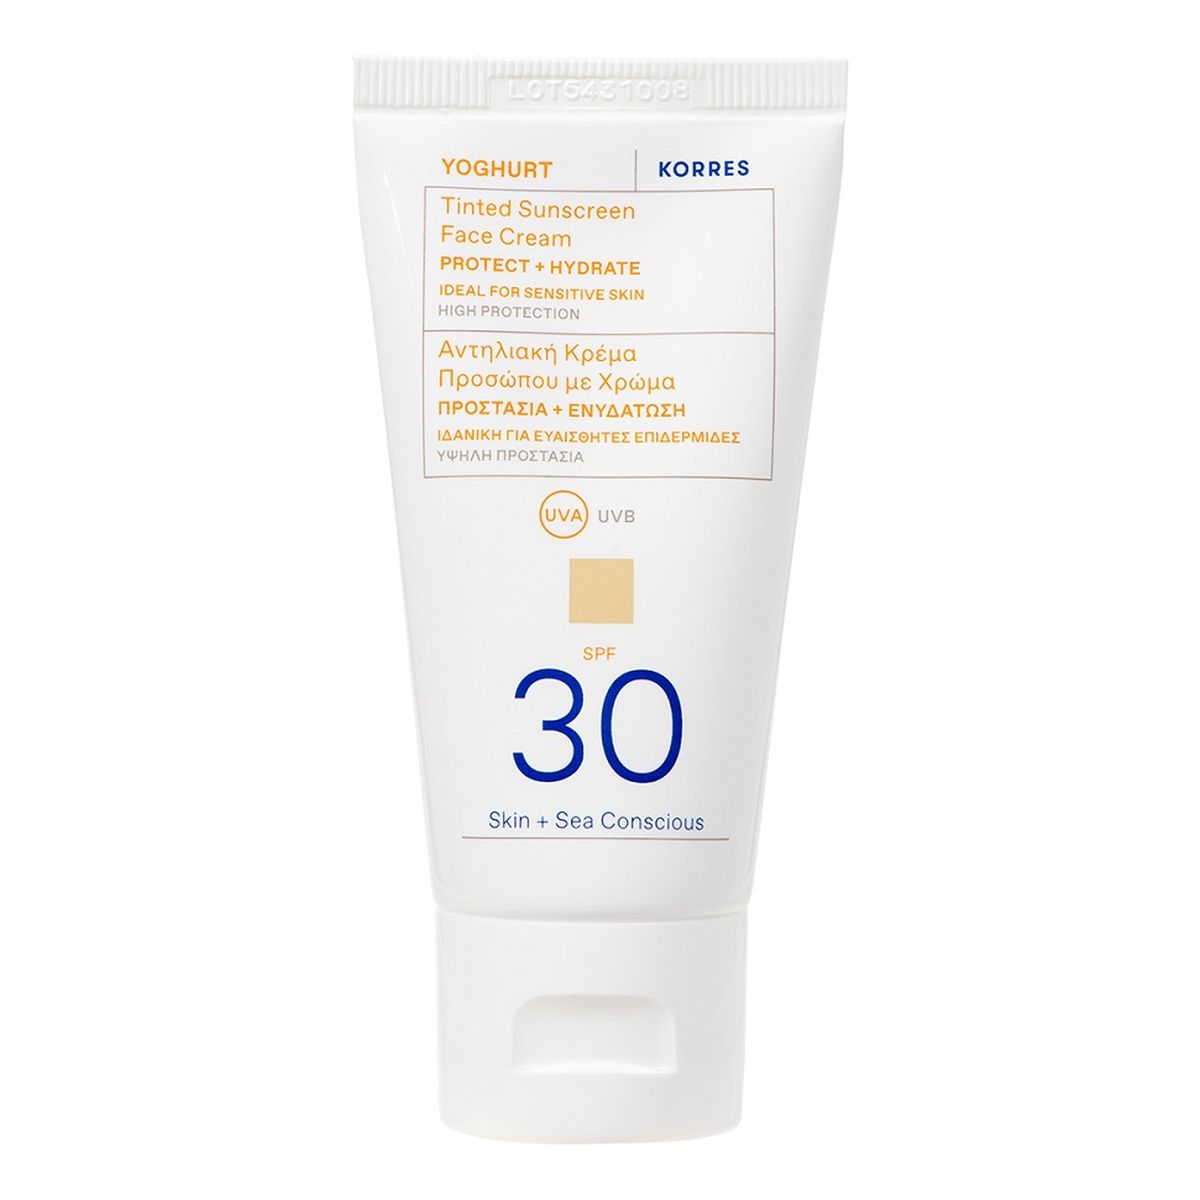 Korres Yoghurt Tinted Sunscreen Face Cream koloryzujący Krem ochronny do twarzy spf30 nude 50ml